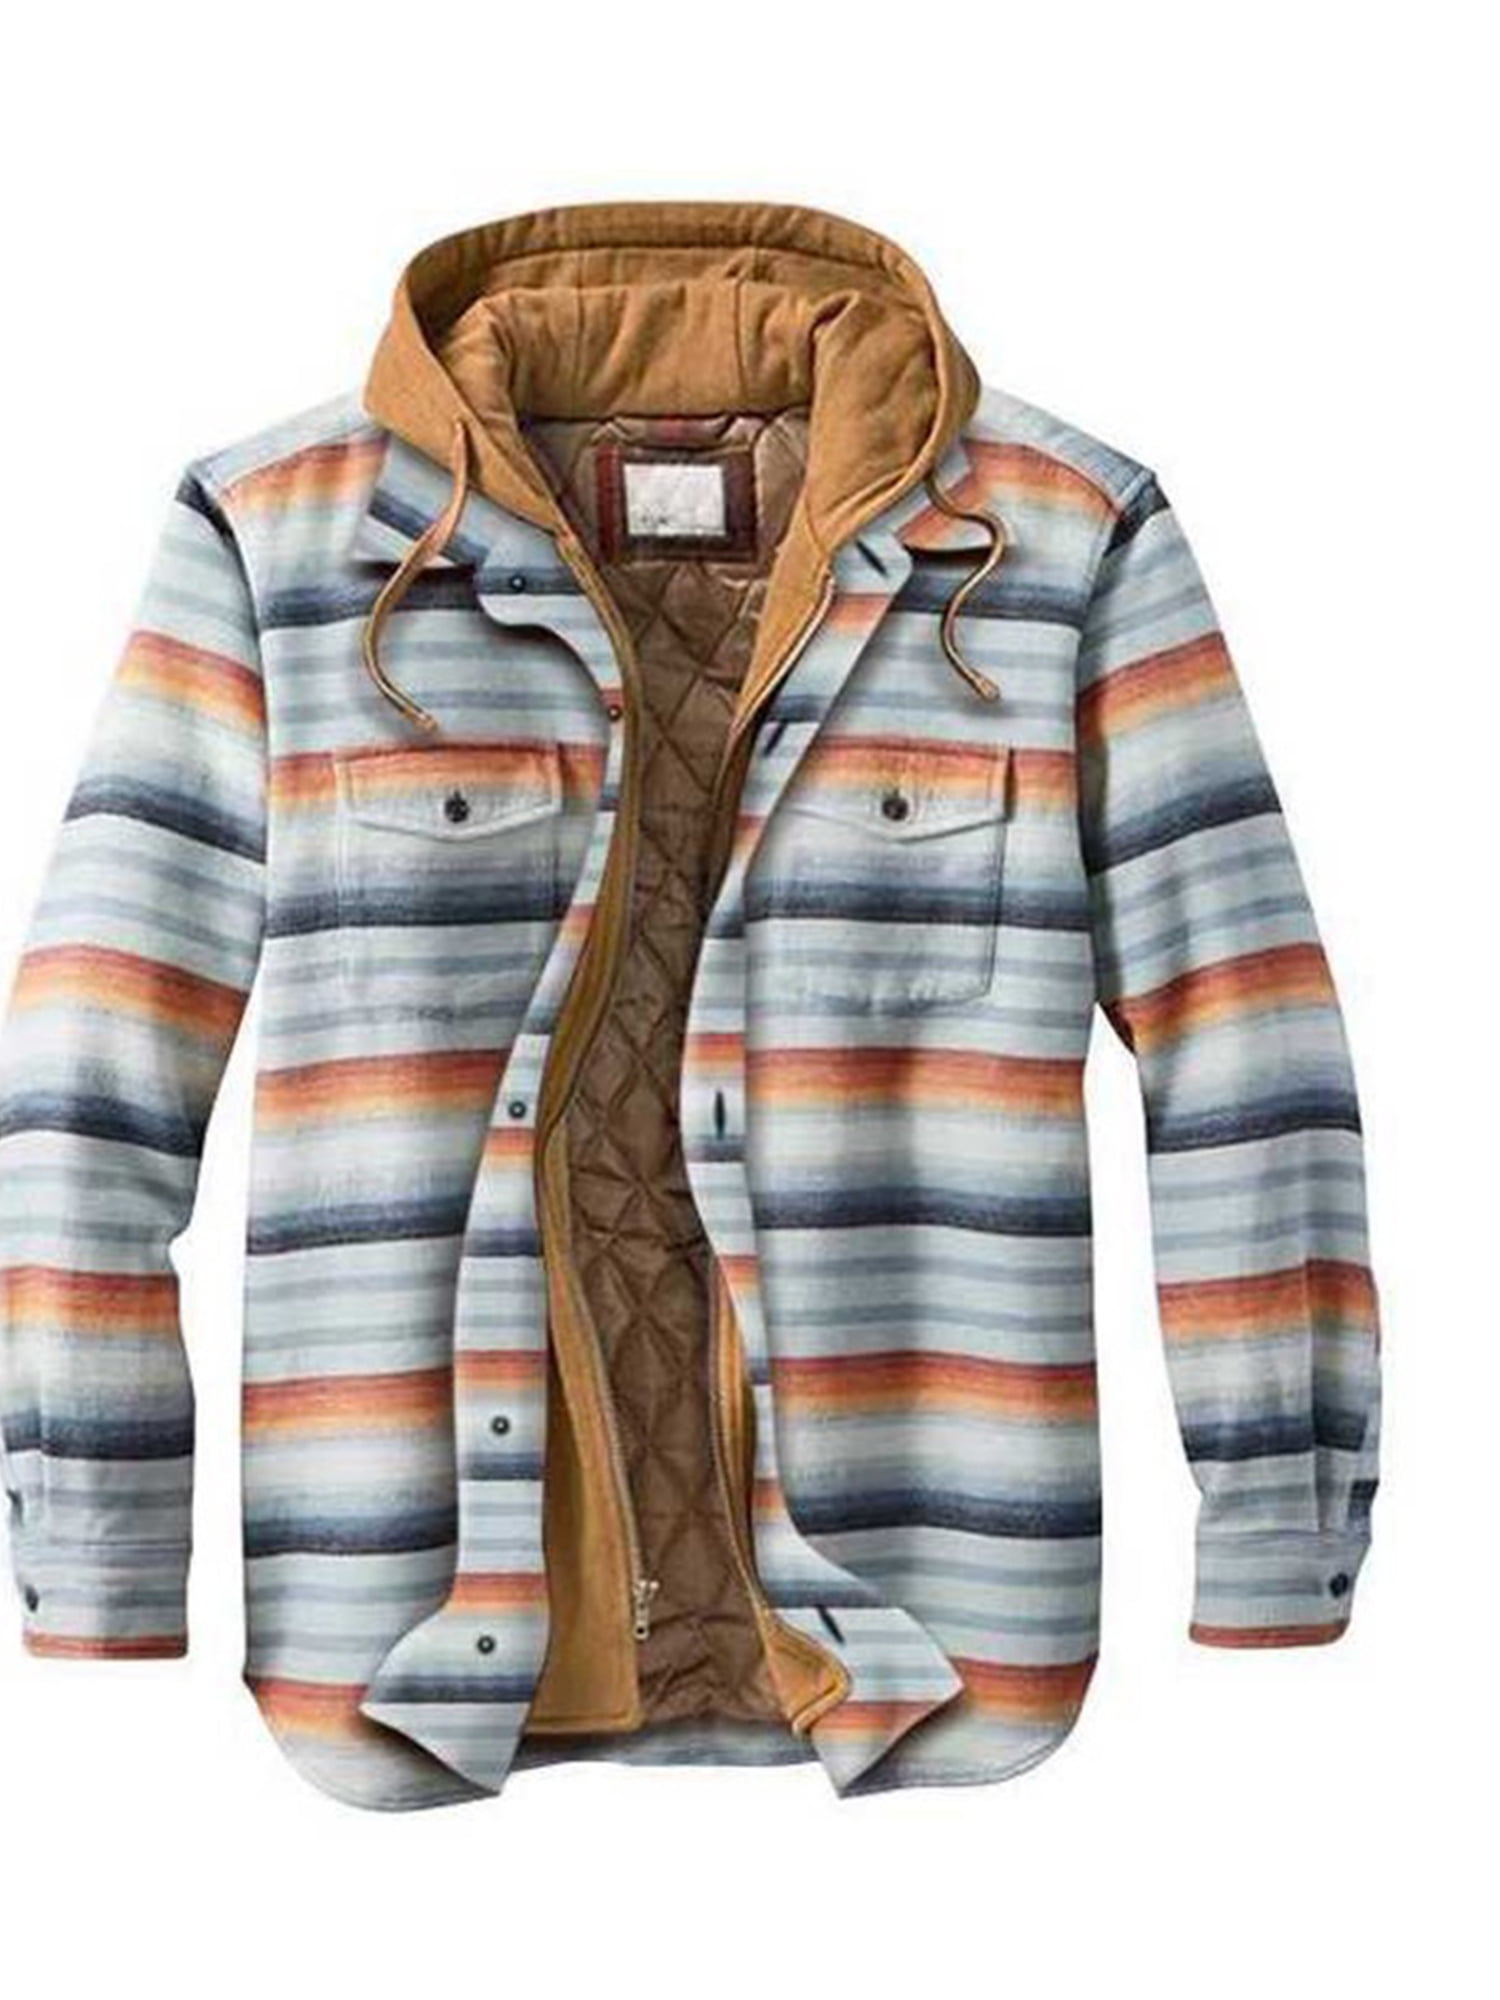 Mens Winter Warm Plaid Jacket Fleece Lined Coat Thicken Coat Parka Outwear Tops